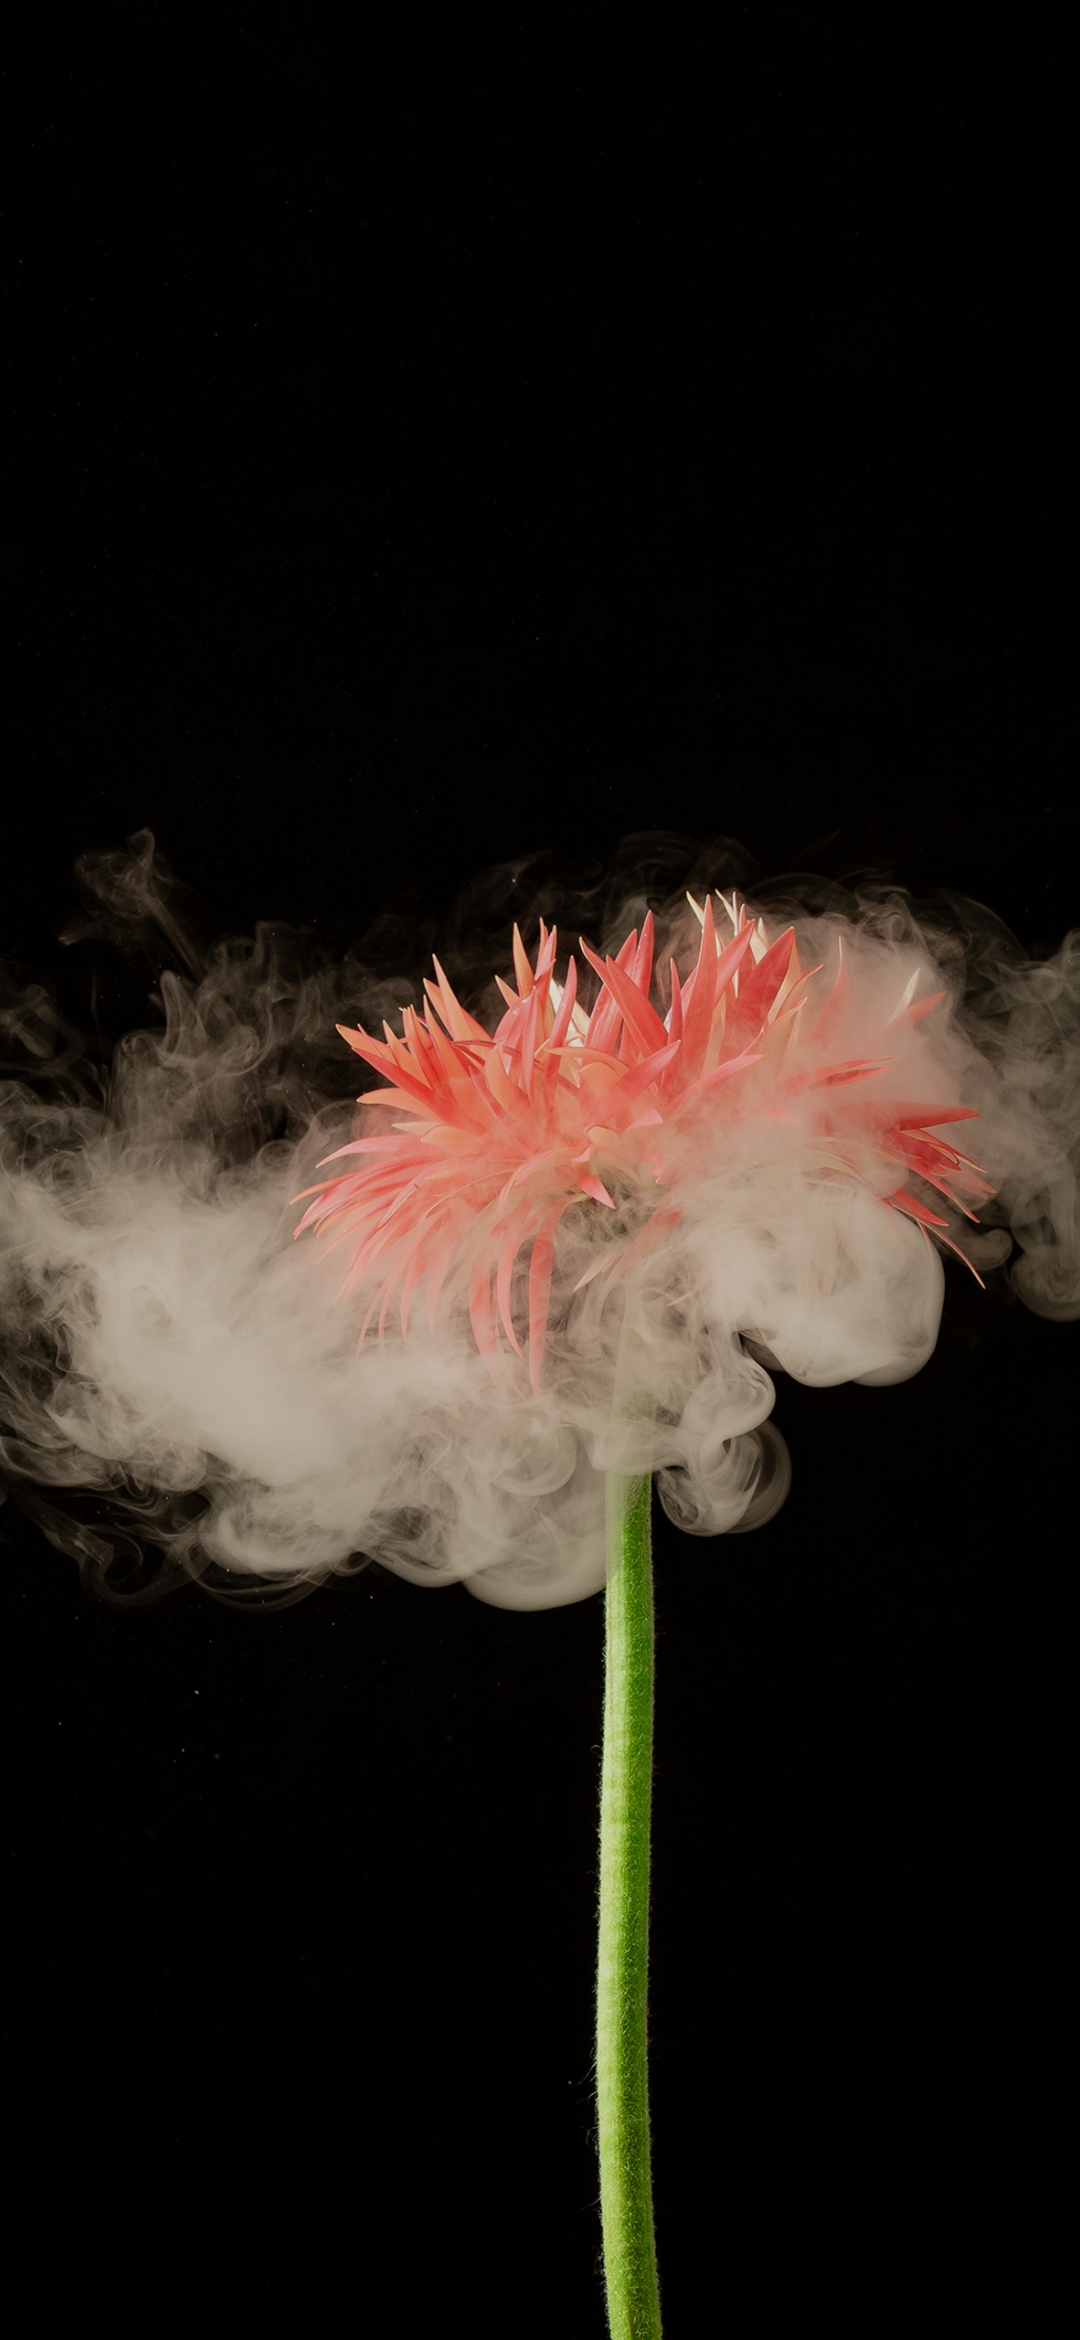 Flower and smoke